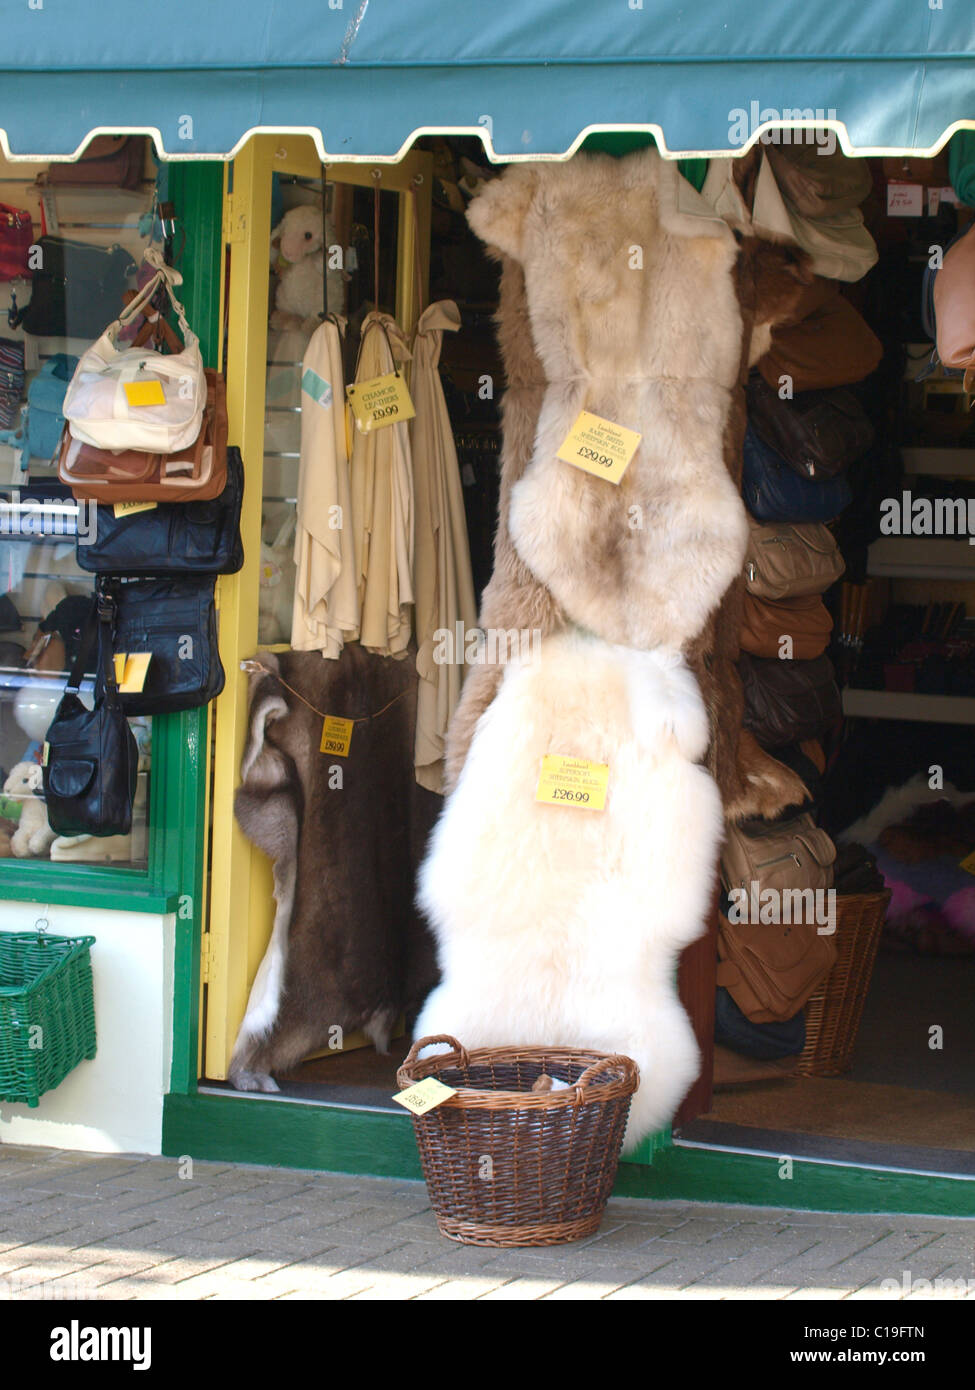 Sheep skin and leather goods shop, Ilfracombe, Devon, UK Stock Photo